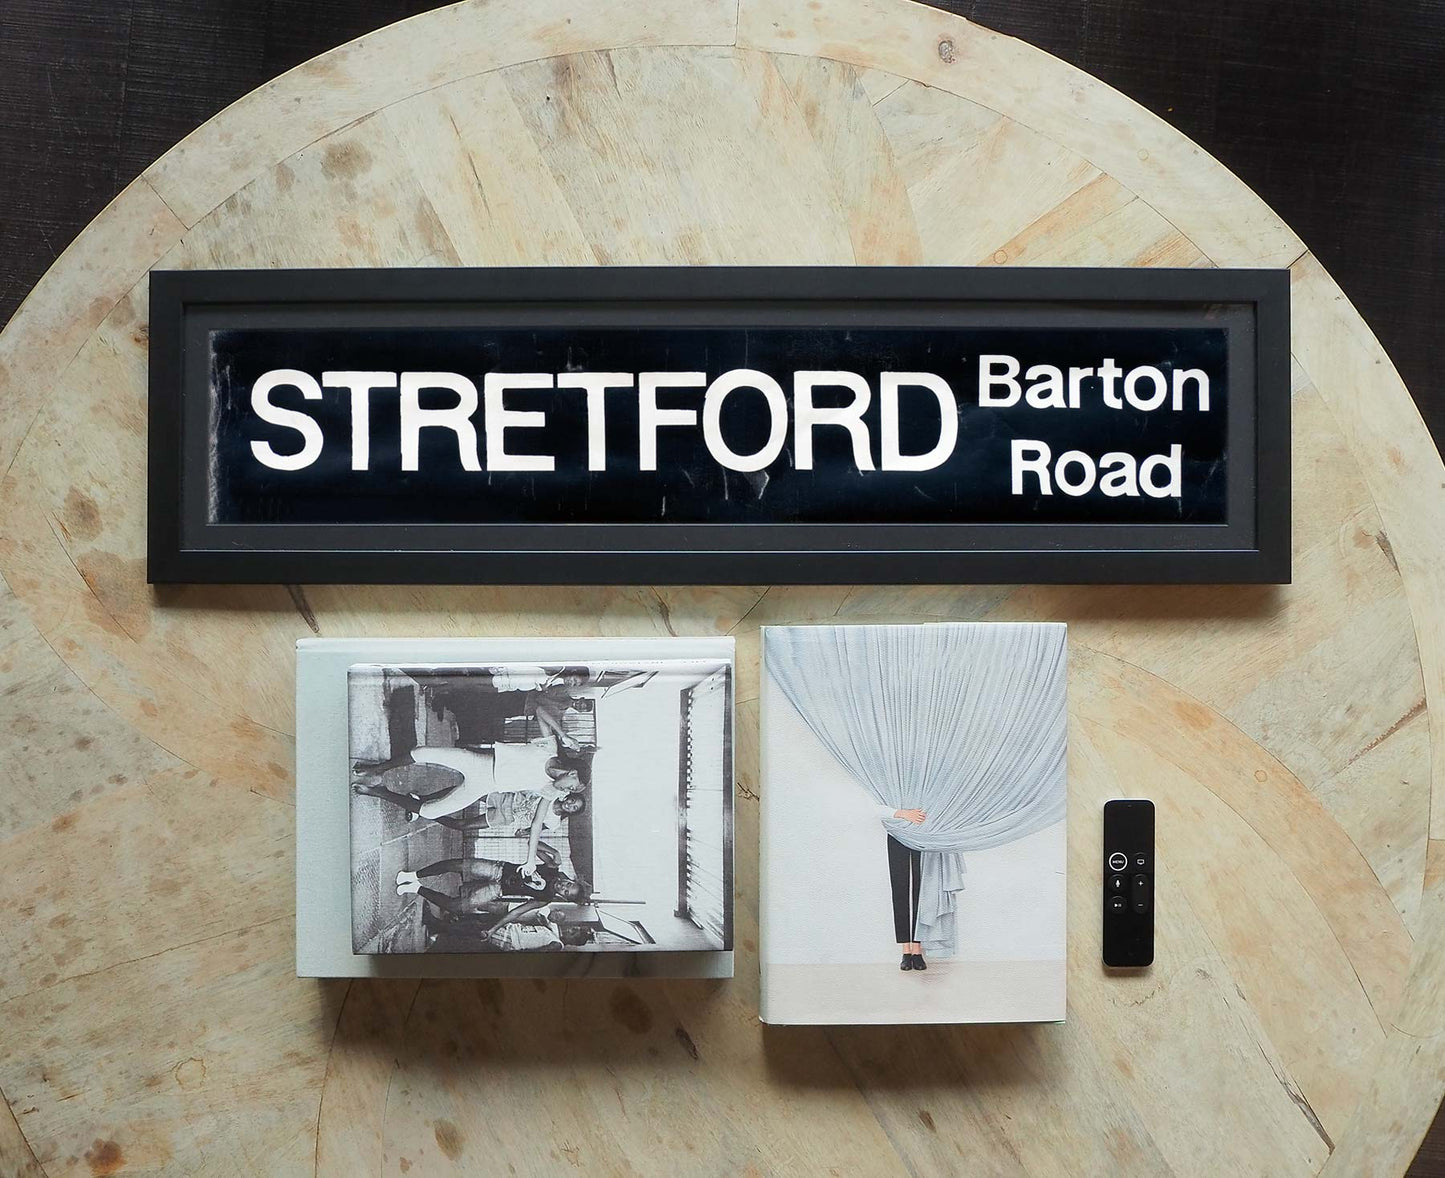 Stretford Barton Road Framed Bus Blind